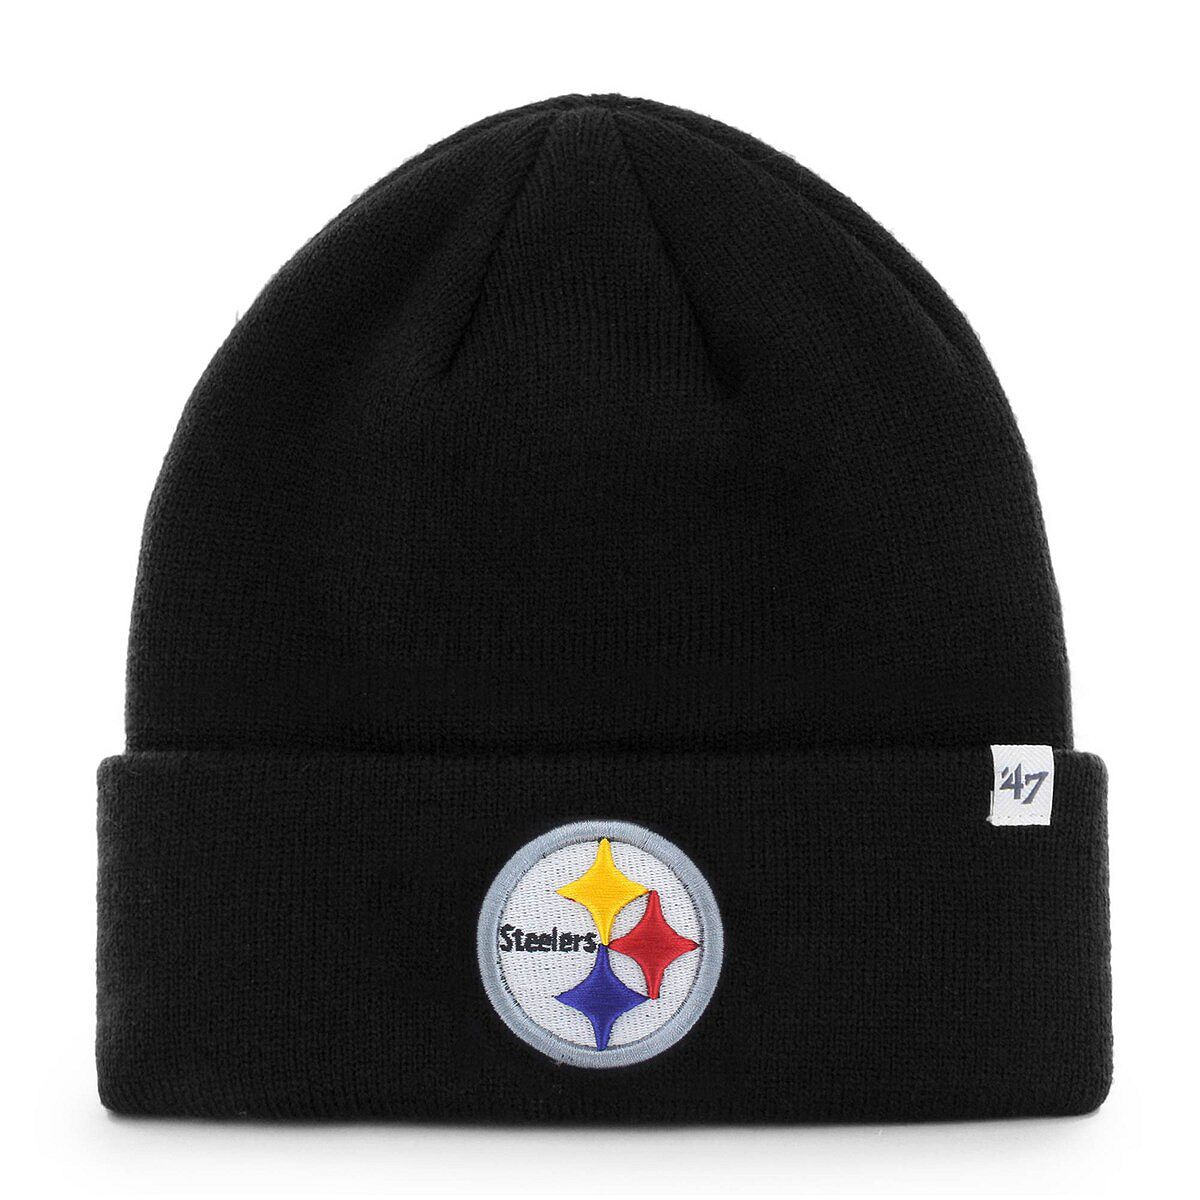 Мужская базовая вязаная шапка с манжетами черного цвета '47 Pittsburgh Steelers Primary Lids